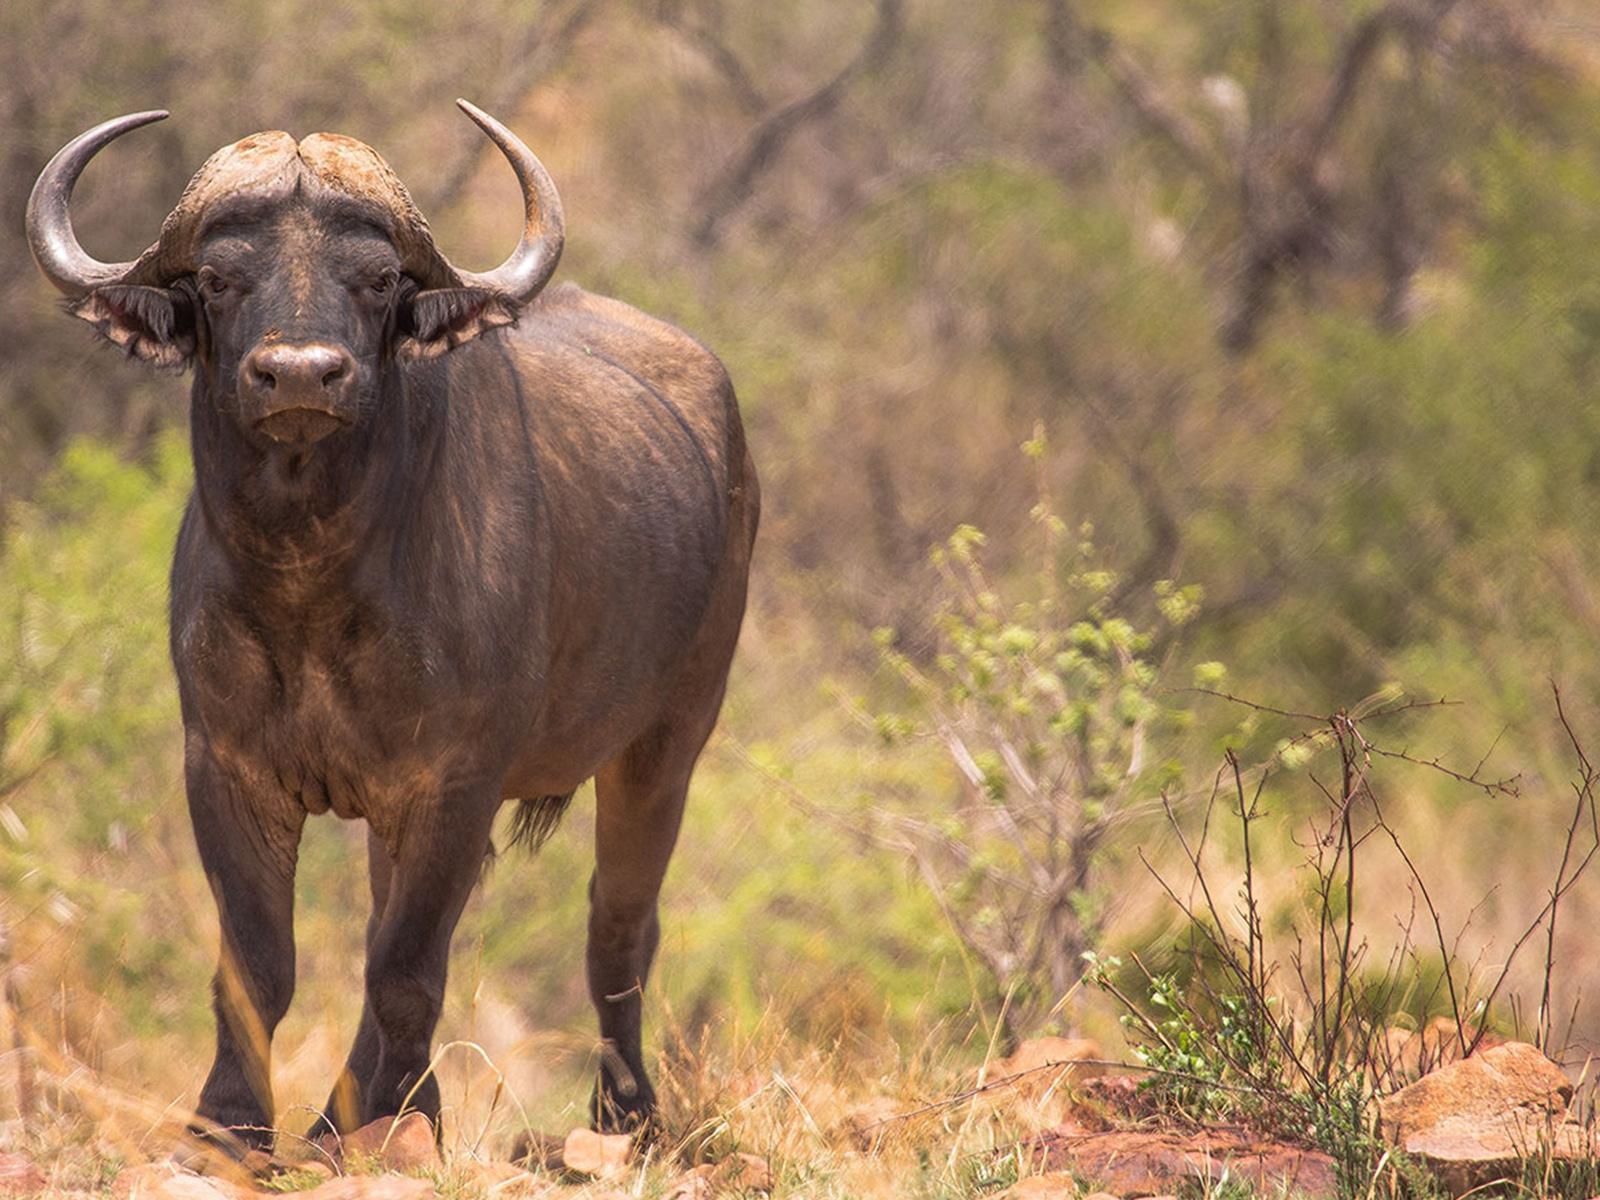 Kubu Metsi Safari Lodge Pilanesberg Game Reserve North West Province South Africa Gnu, Mammal, Animal, Herbivore, Water Buffalo